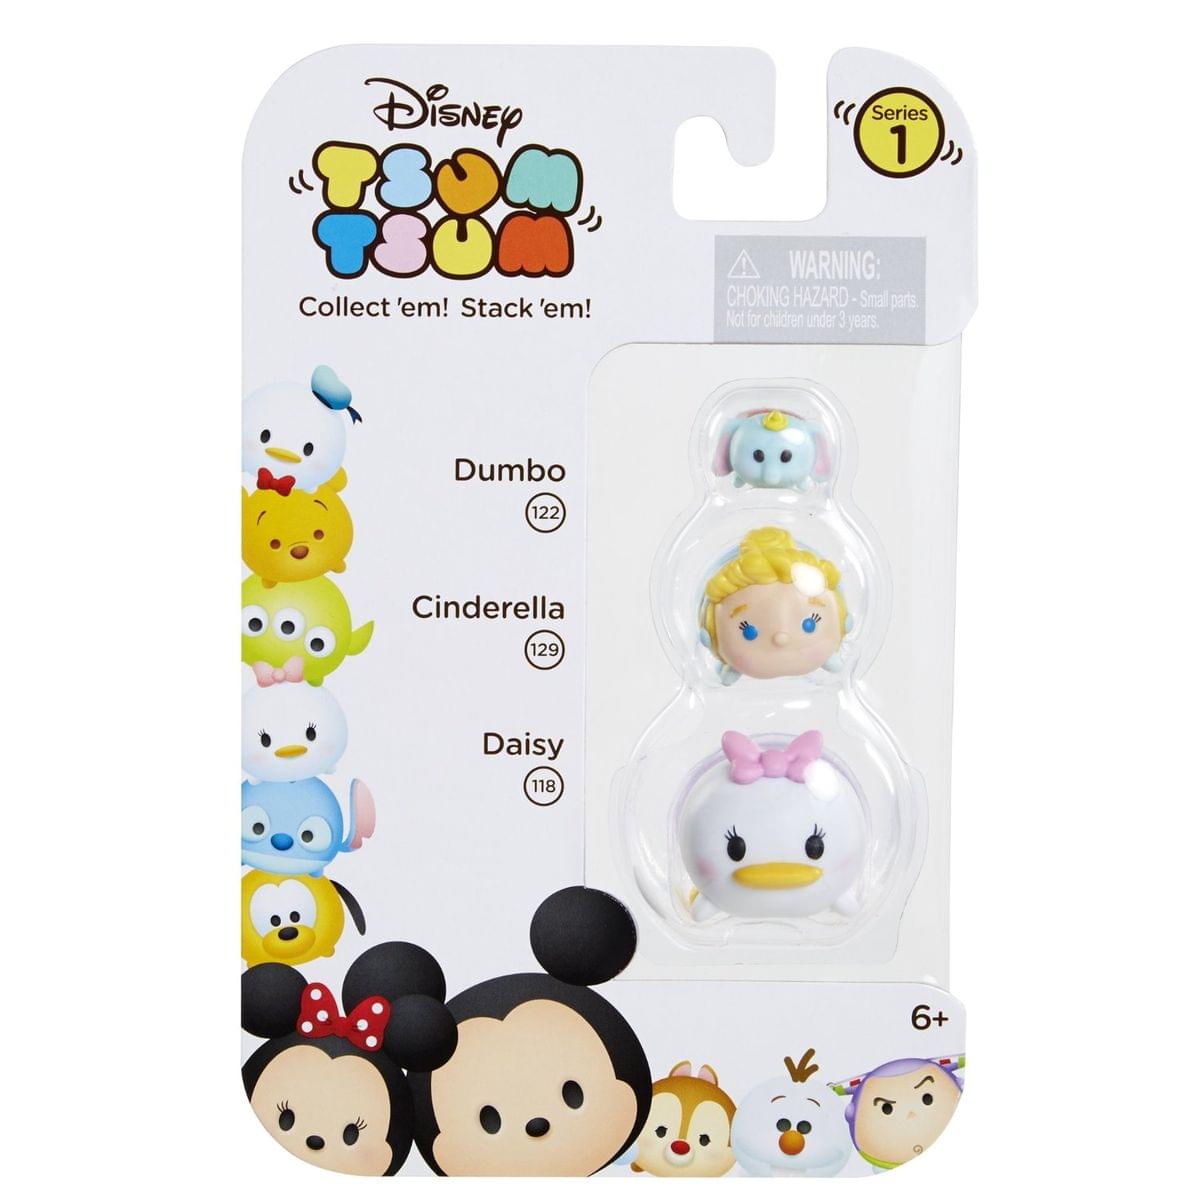 Disney Tsum Tsum 3 Pack: Dumbo, Cinderella, Daisy